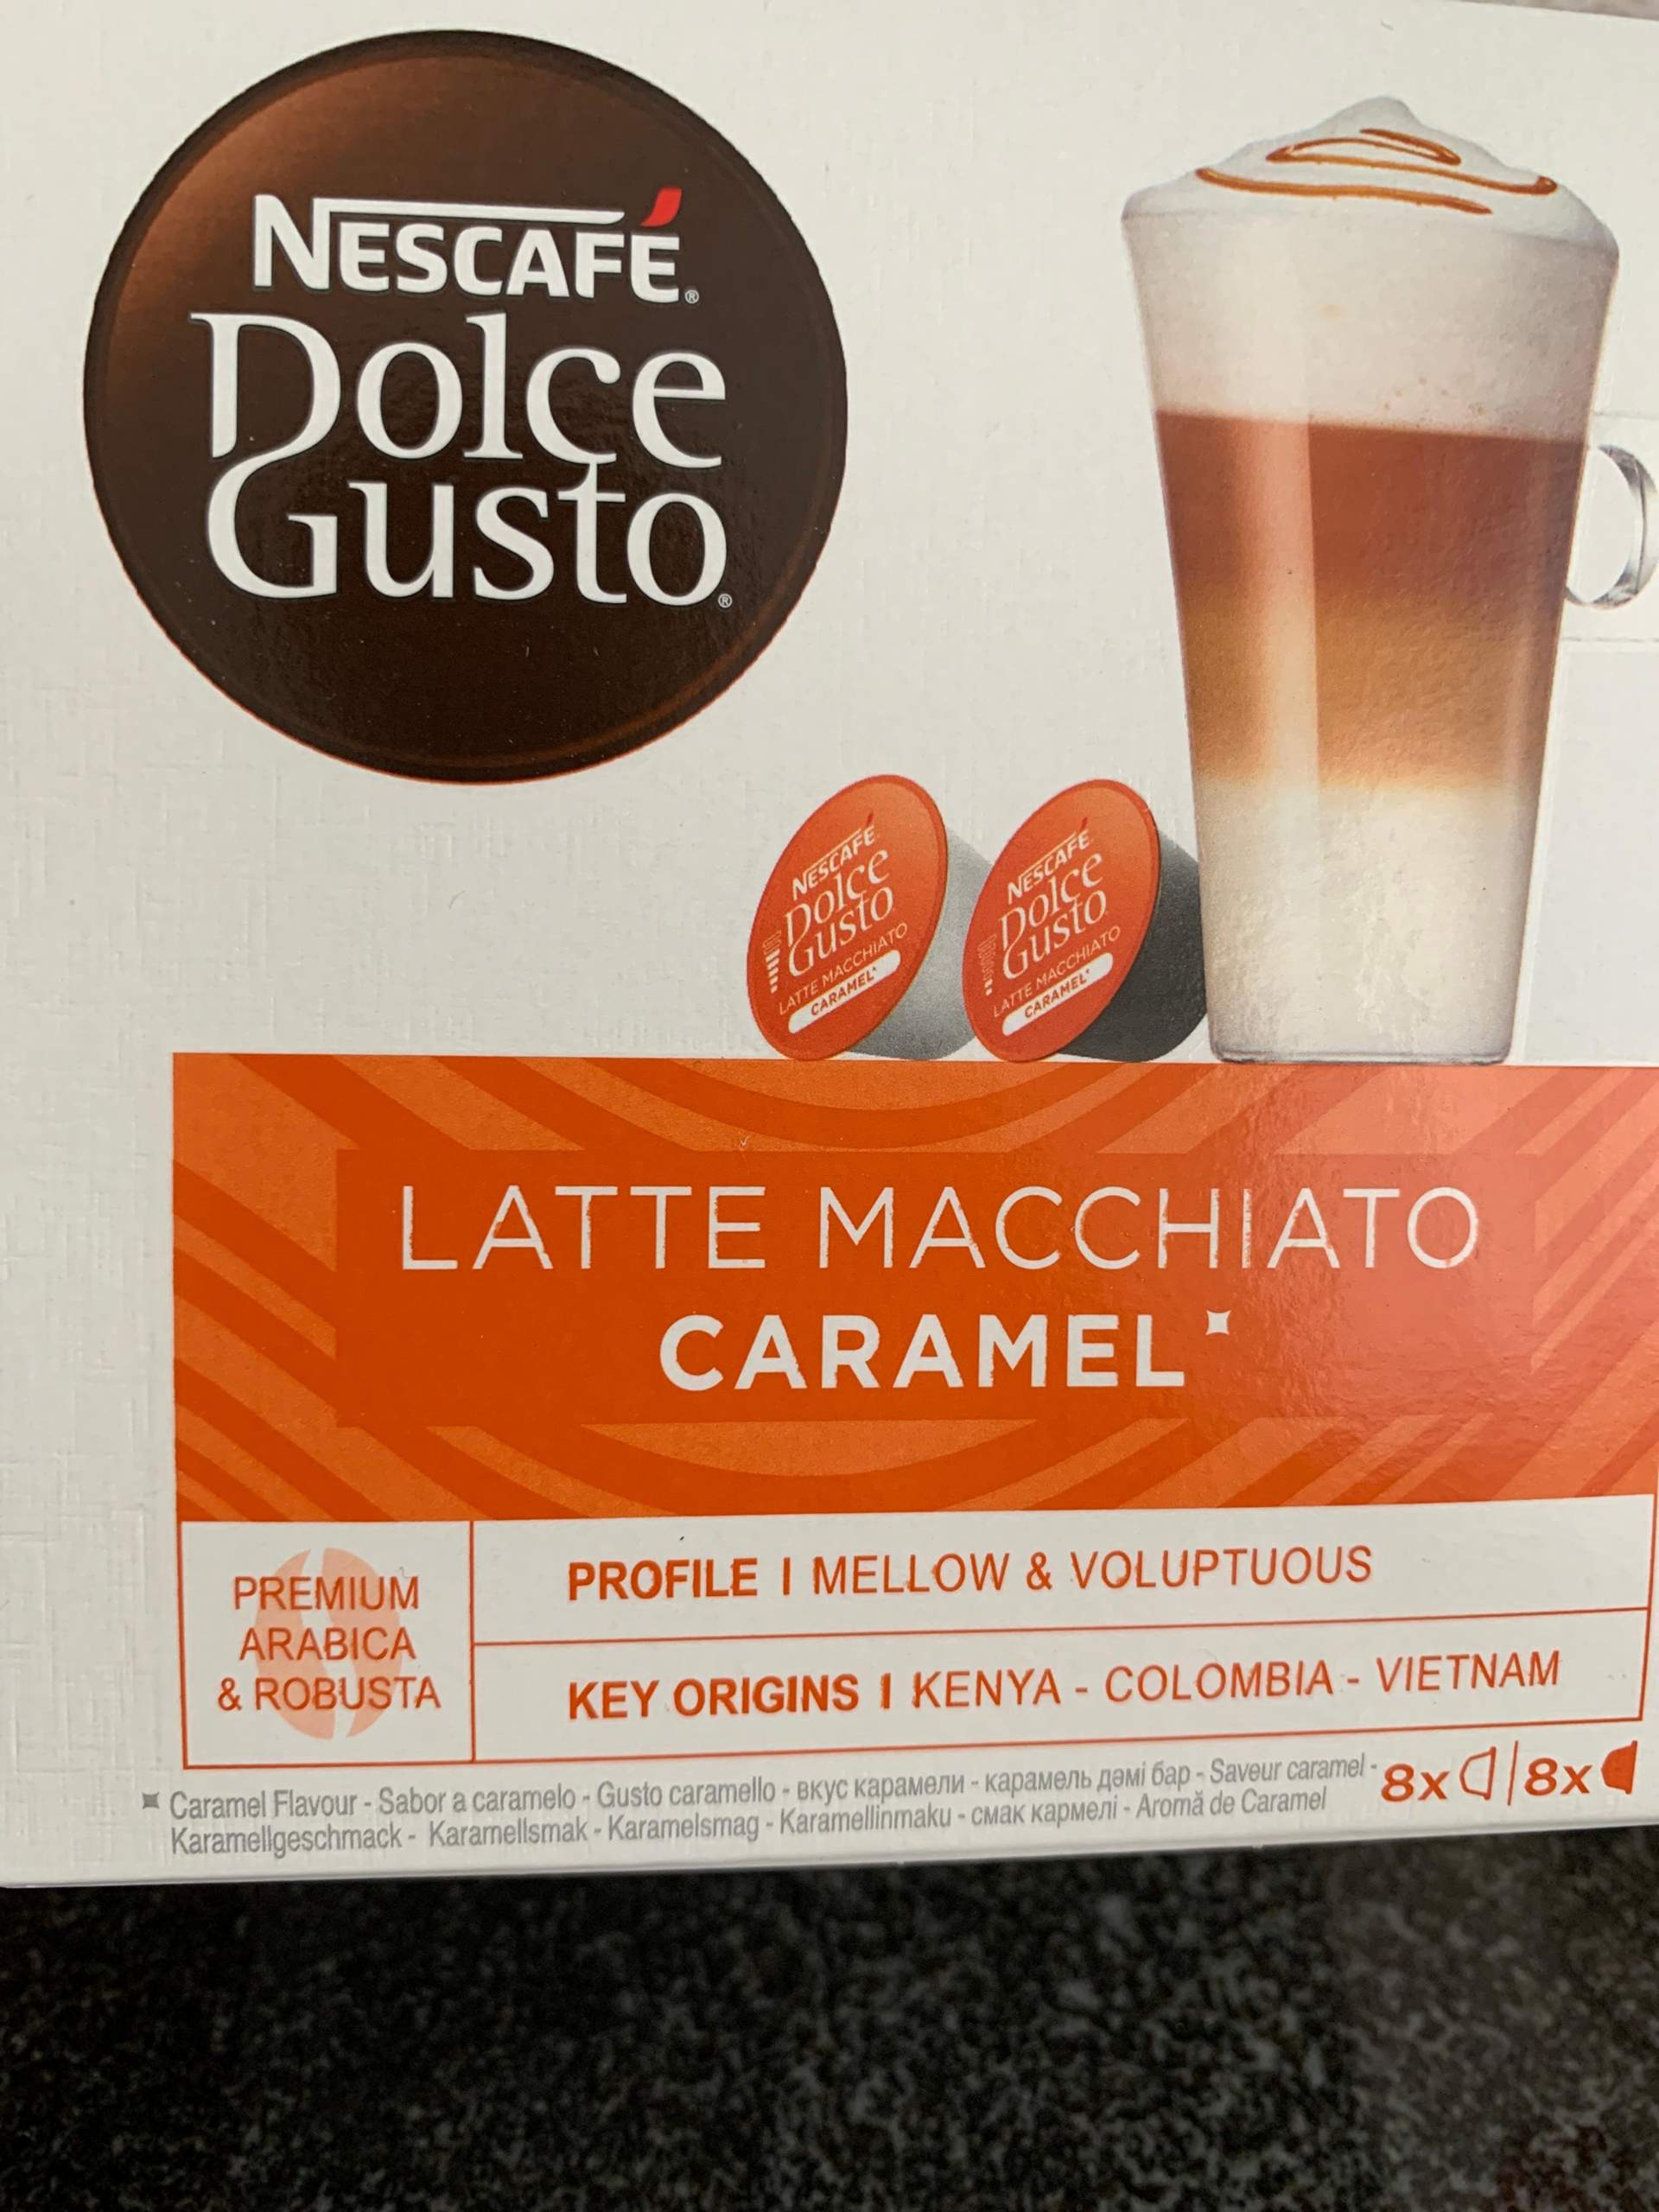 Warm kalt latte macchiato? (Kaffee, Kaffeemaschine)